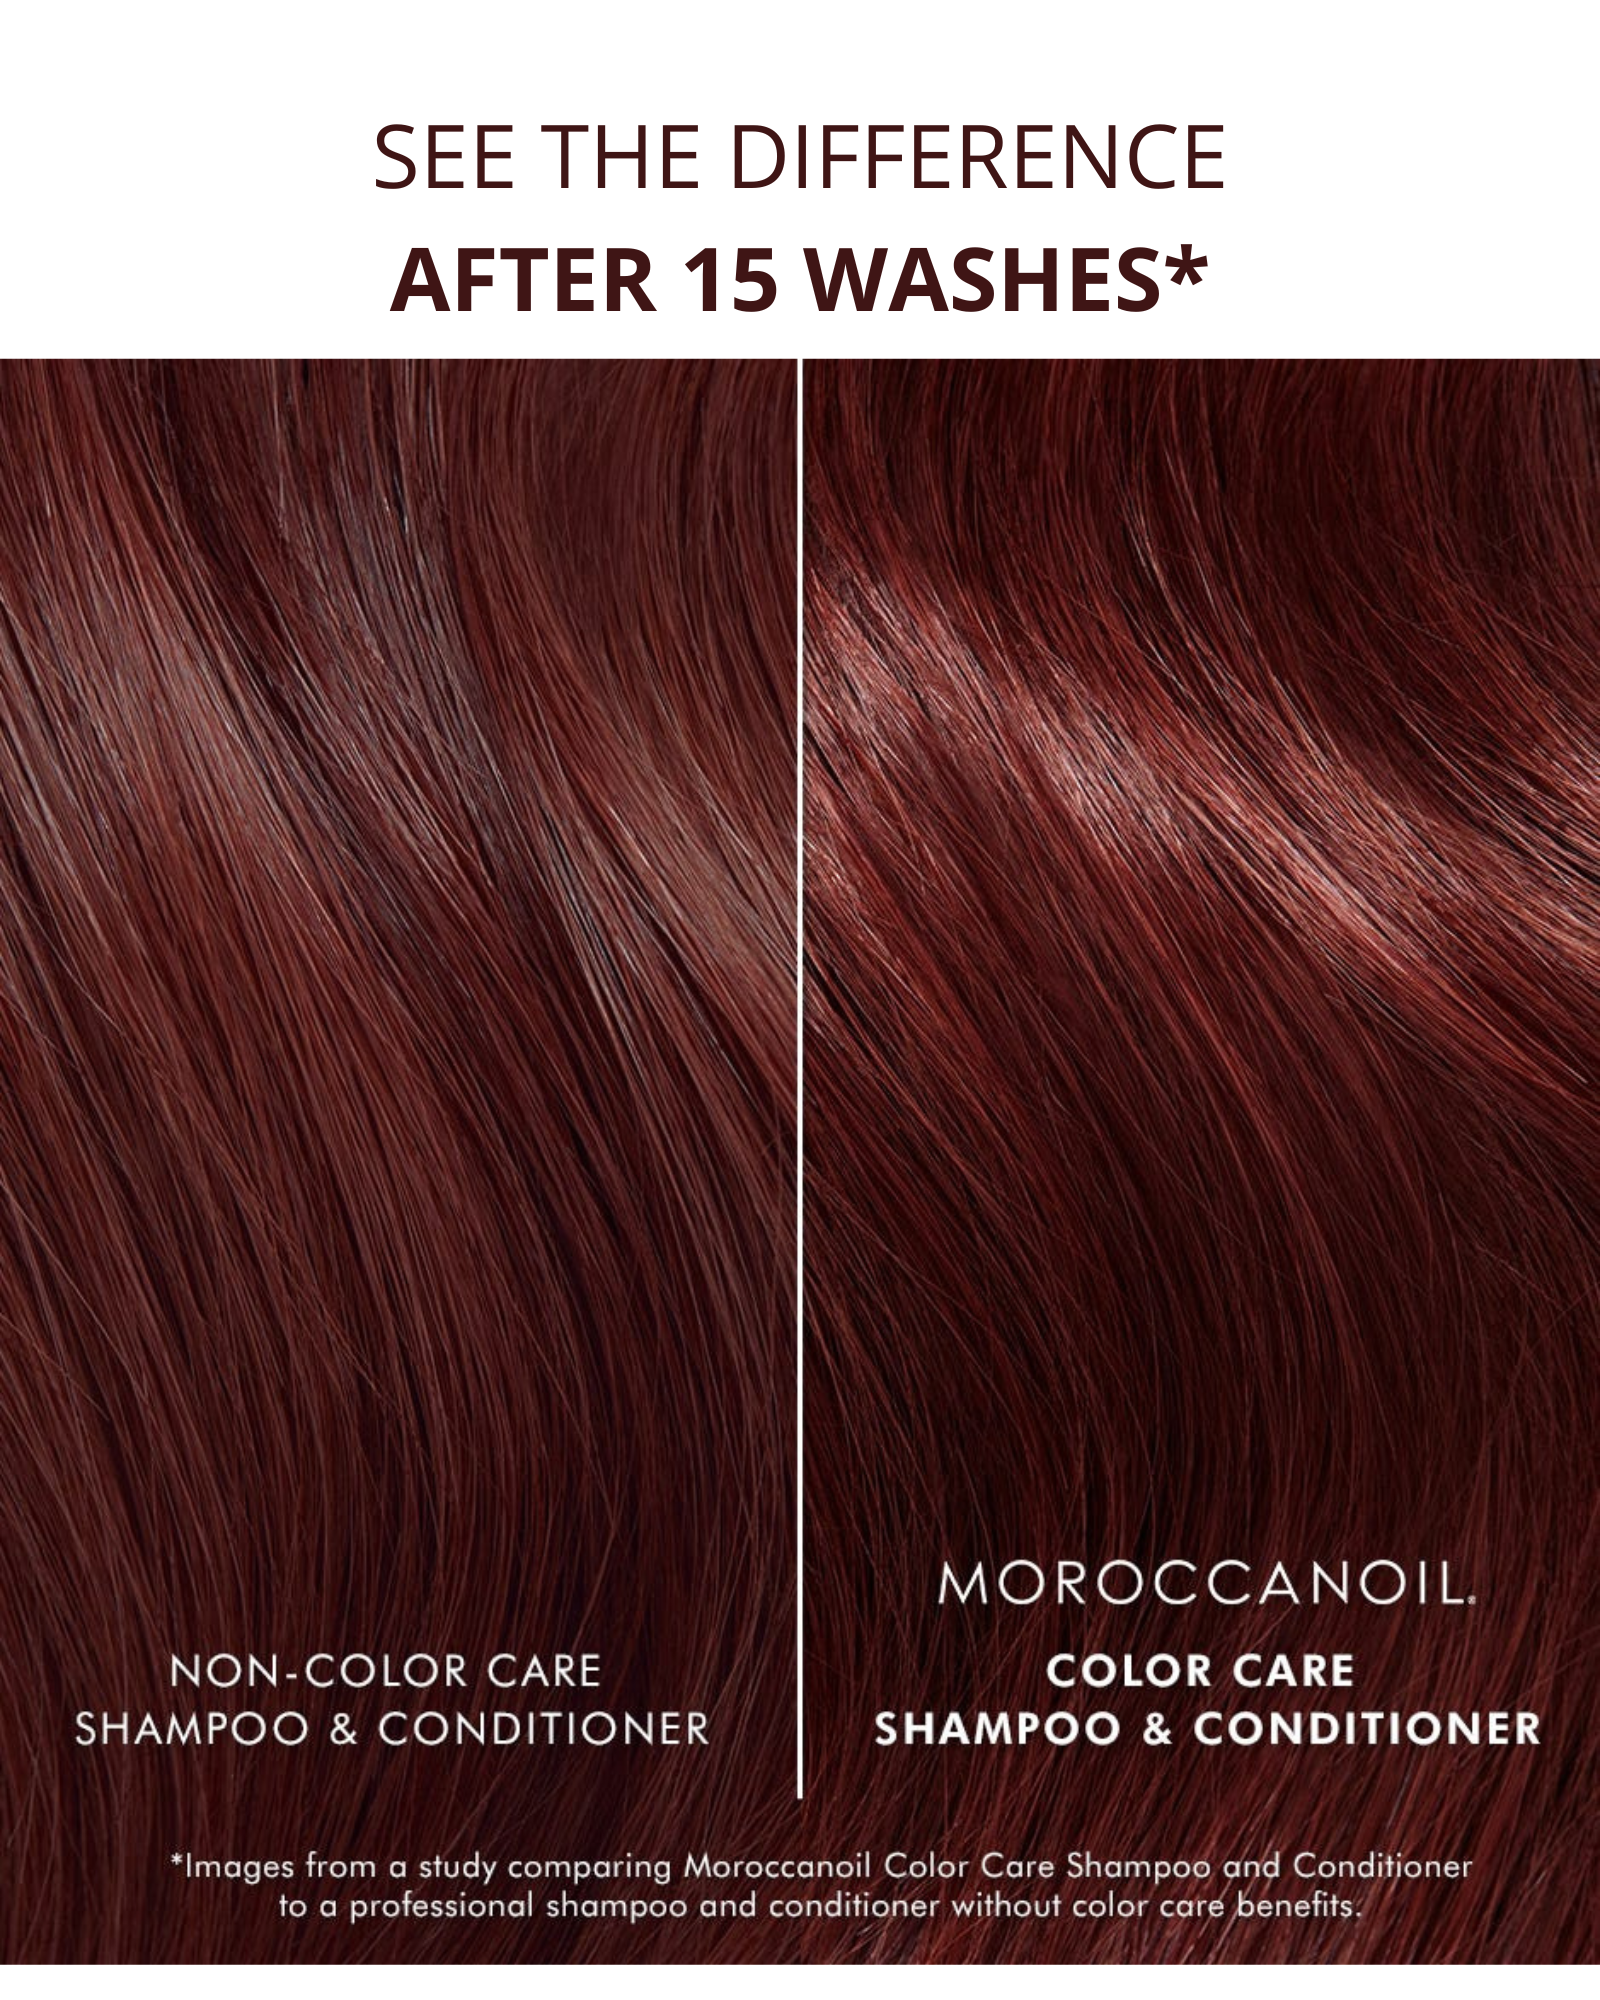 Shampoo for color-treated hair (MoroccanOil Color Care Shampoo)